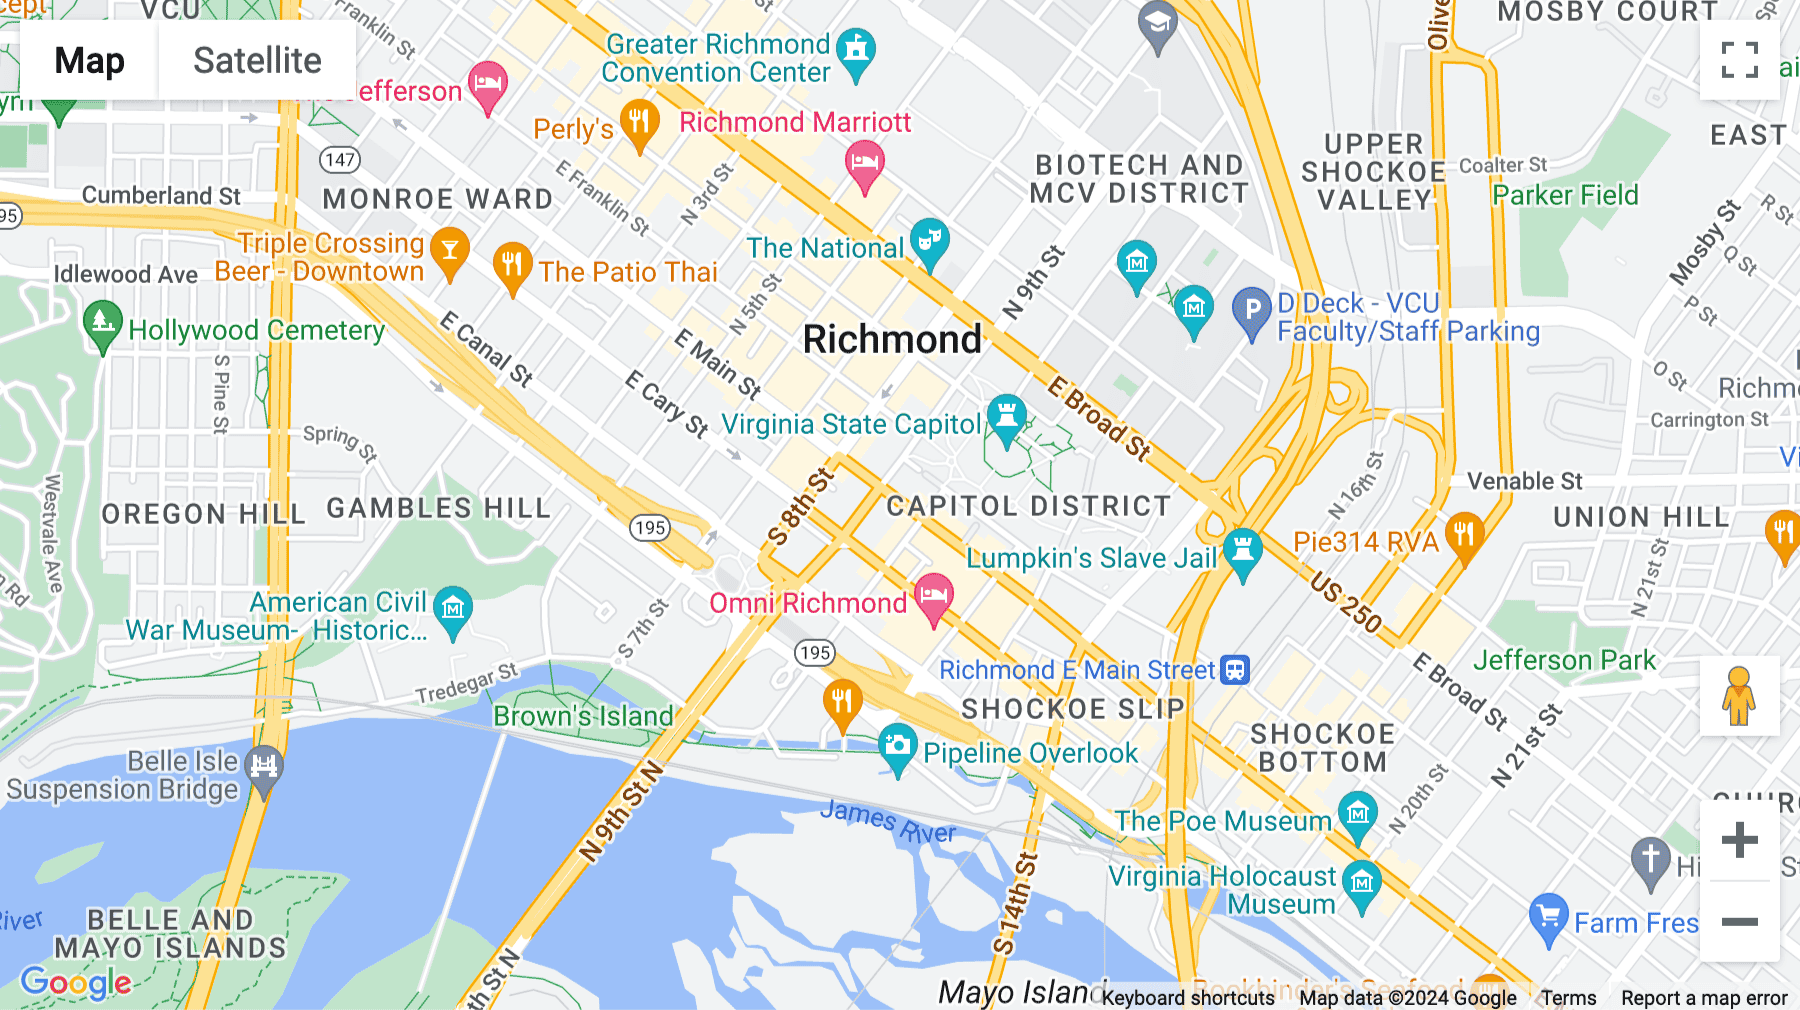 Click for interative map of 919 E. Main Street, Suite 1000, Richmond, Richmond